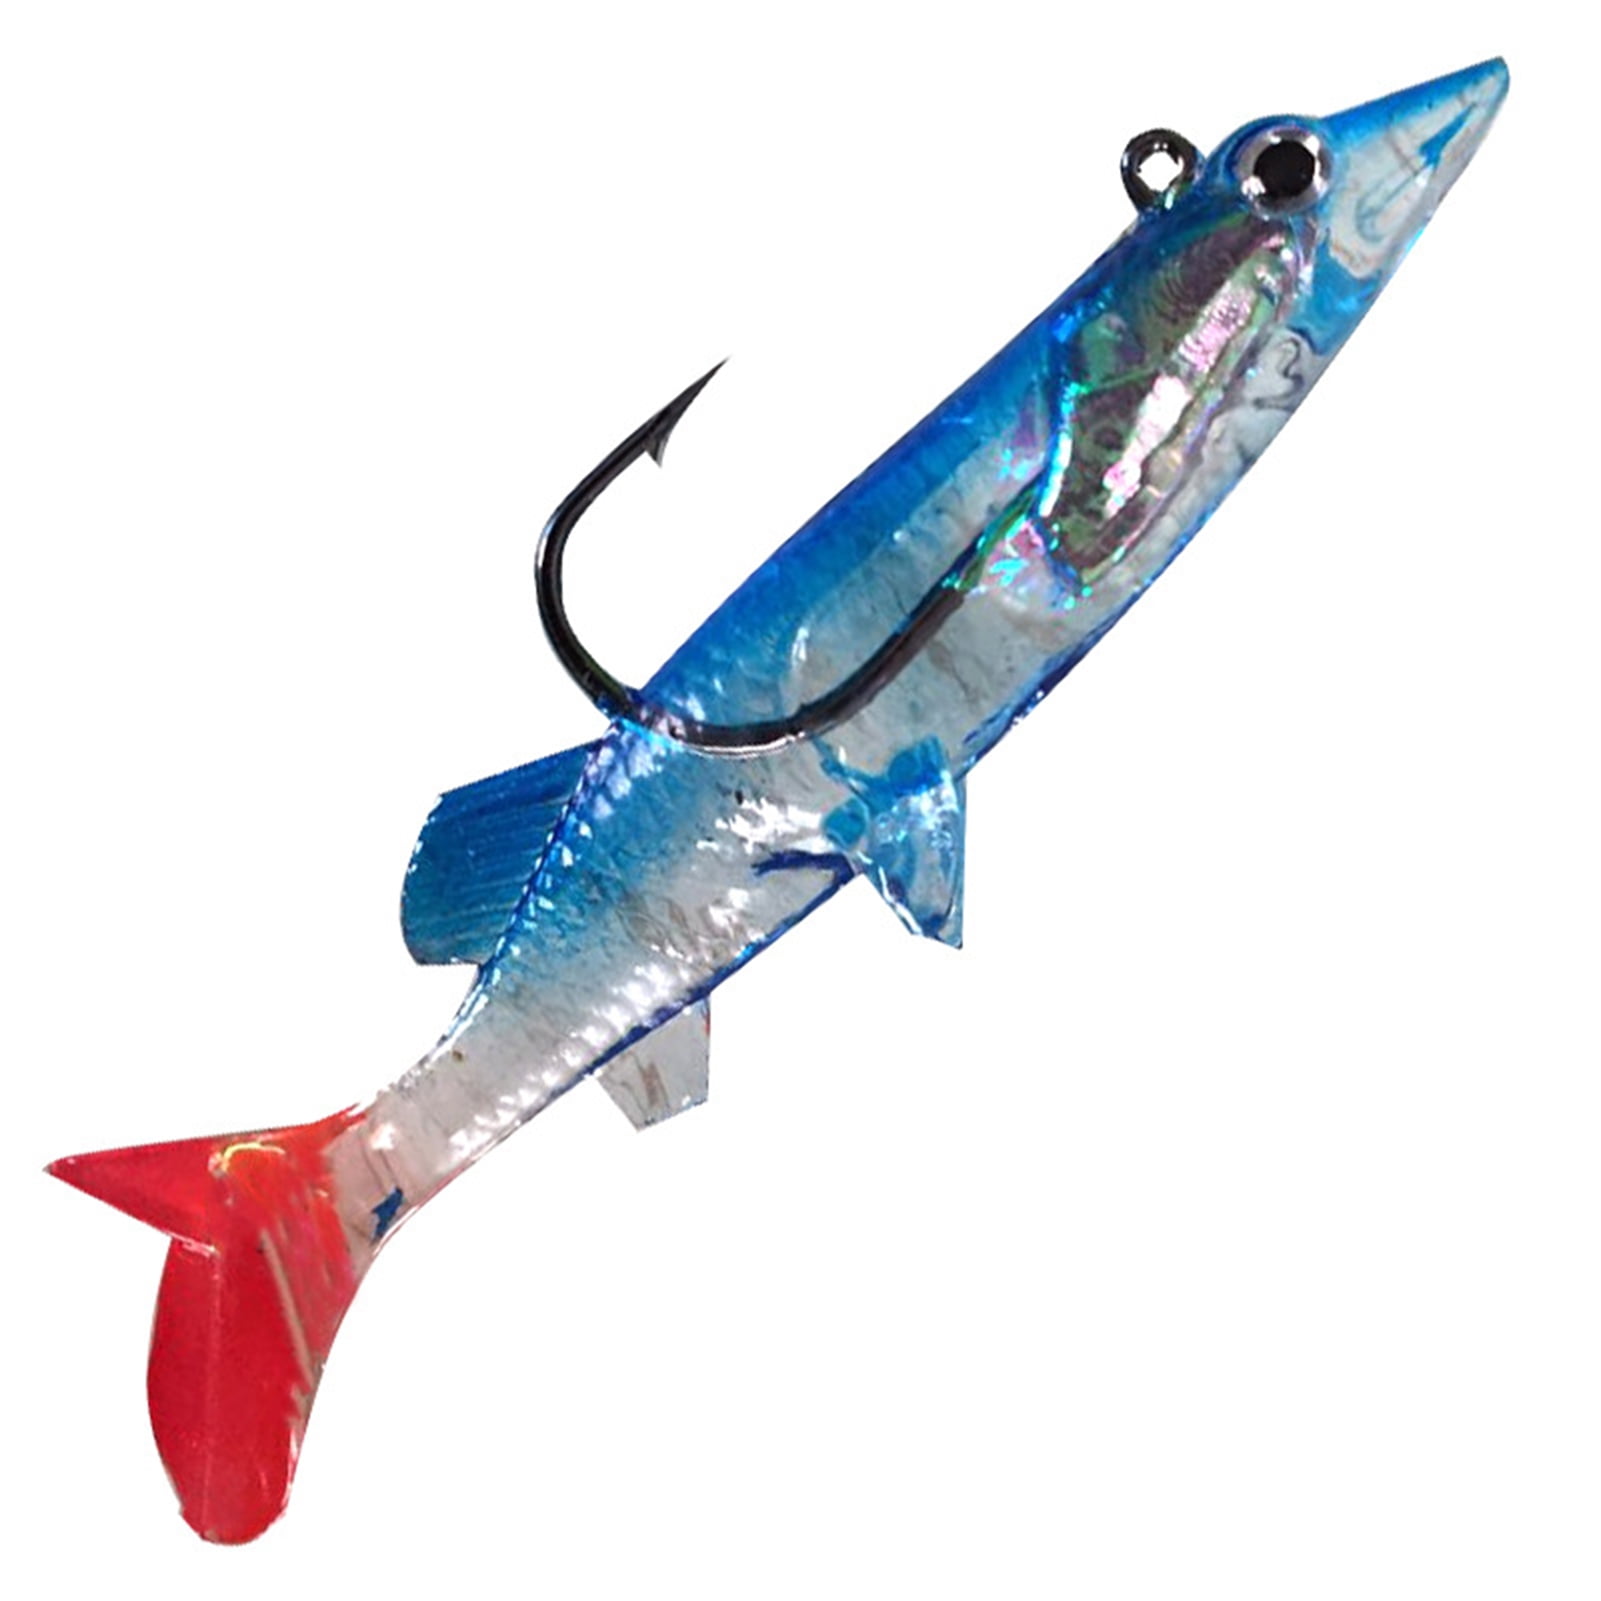 8cm Artificial Fishing Lure Bite-resistant Realistic Plastic